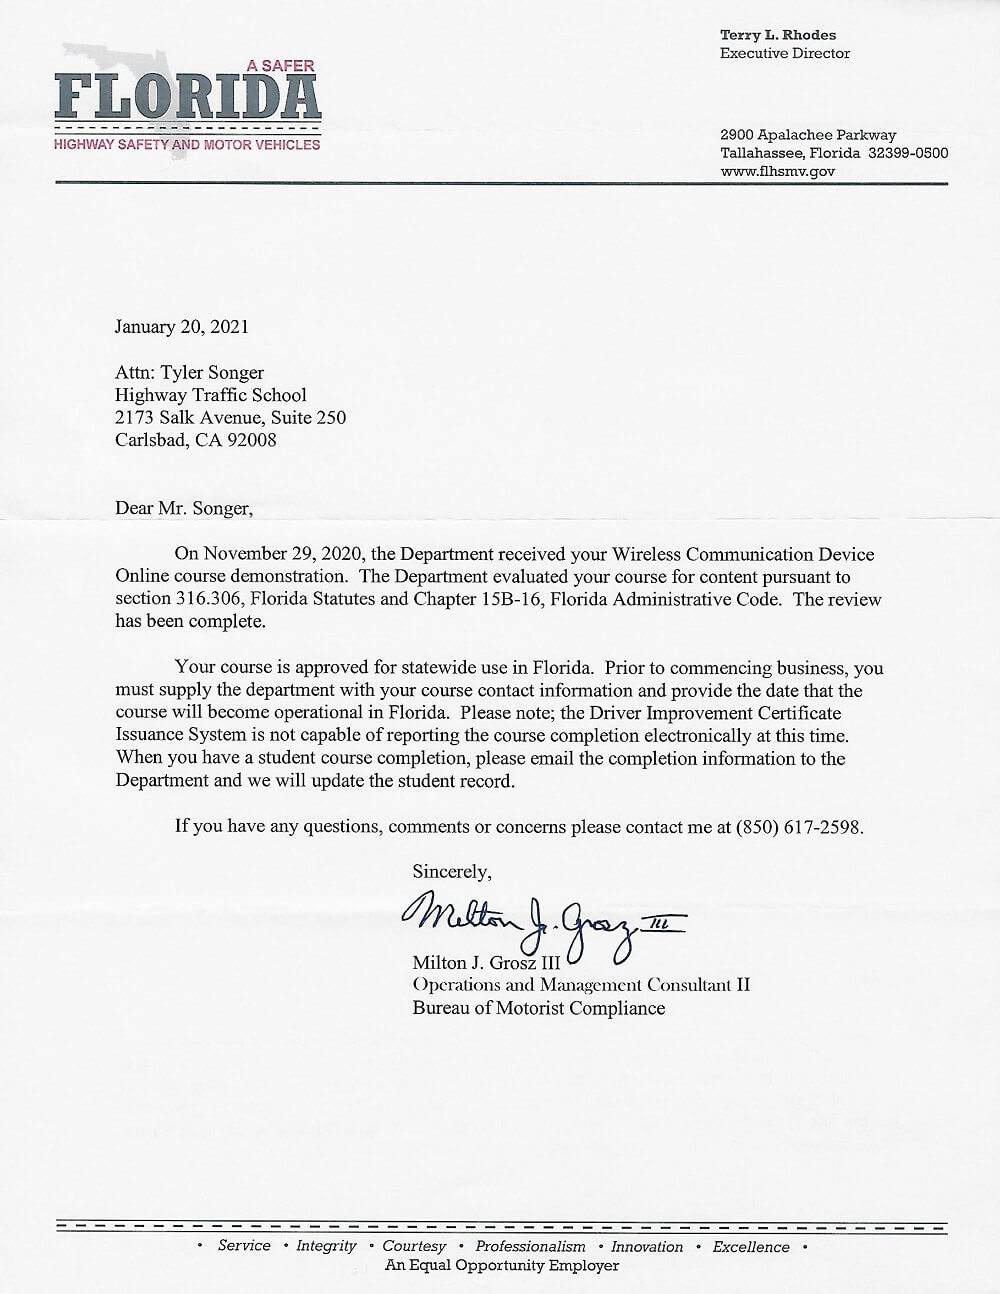 Florida DHSMV WCD certification letter